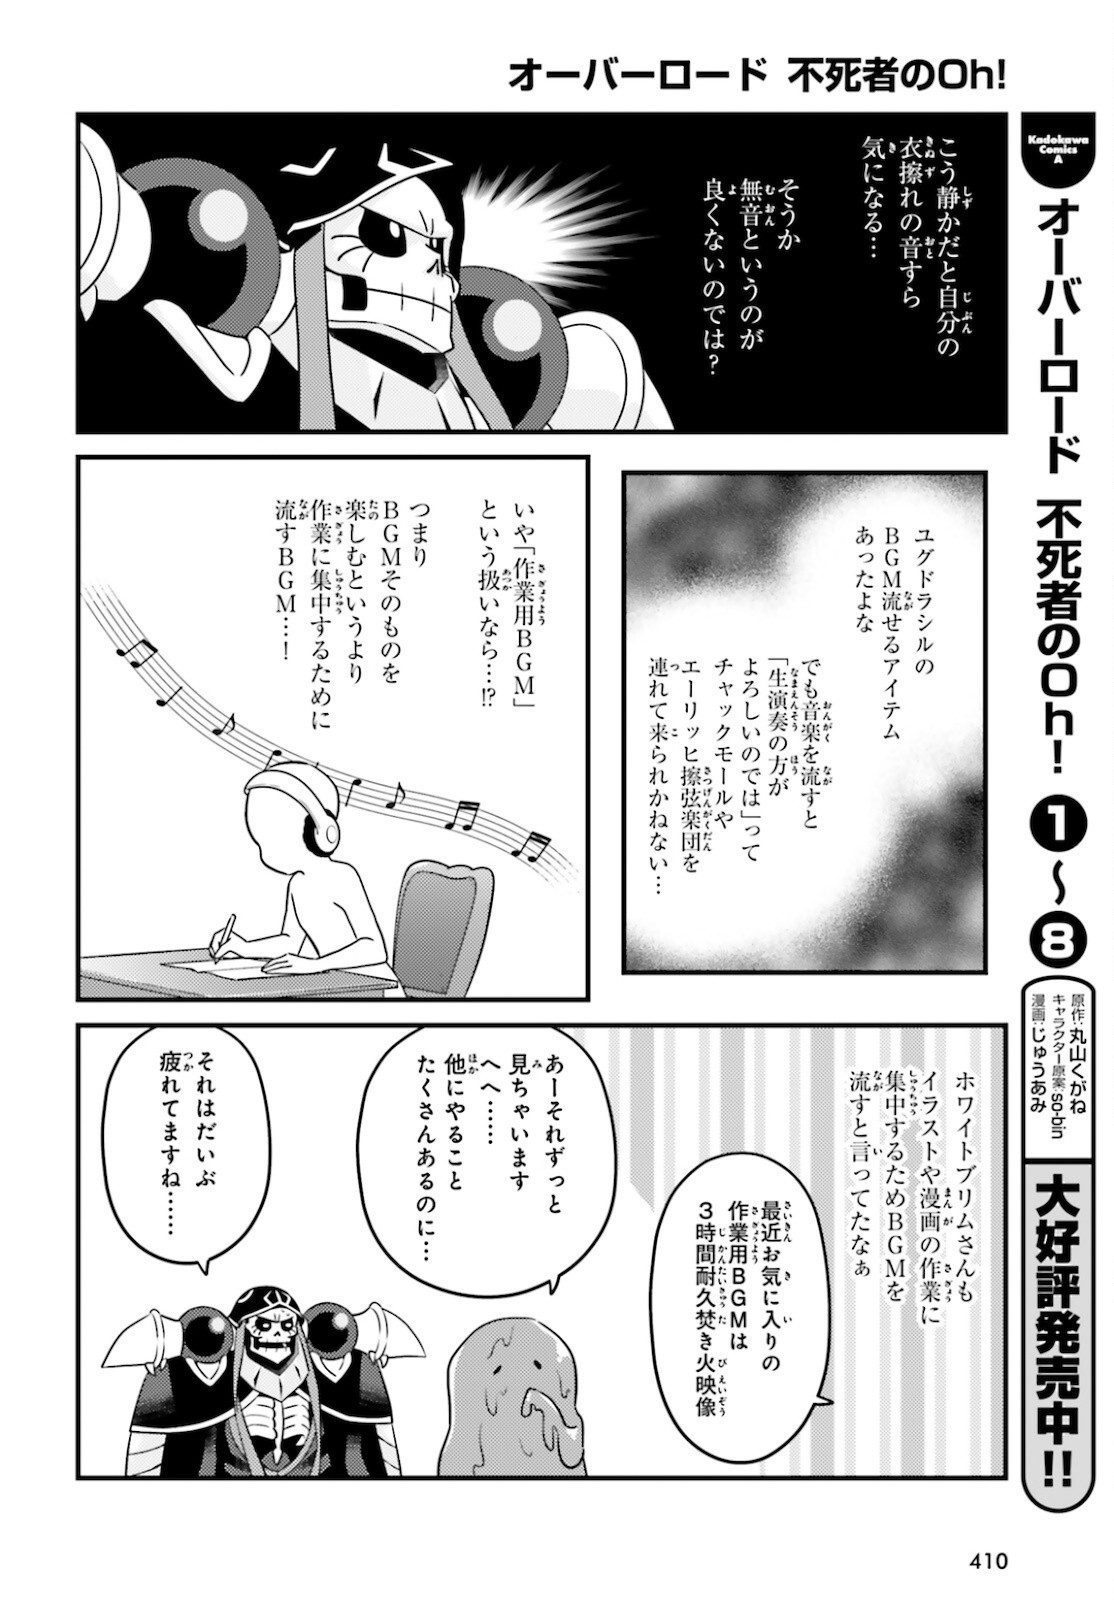 Overlord-Fushisha-no-Oh - Chapter 53 - Page 4